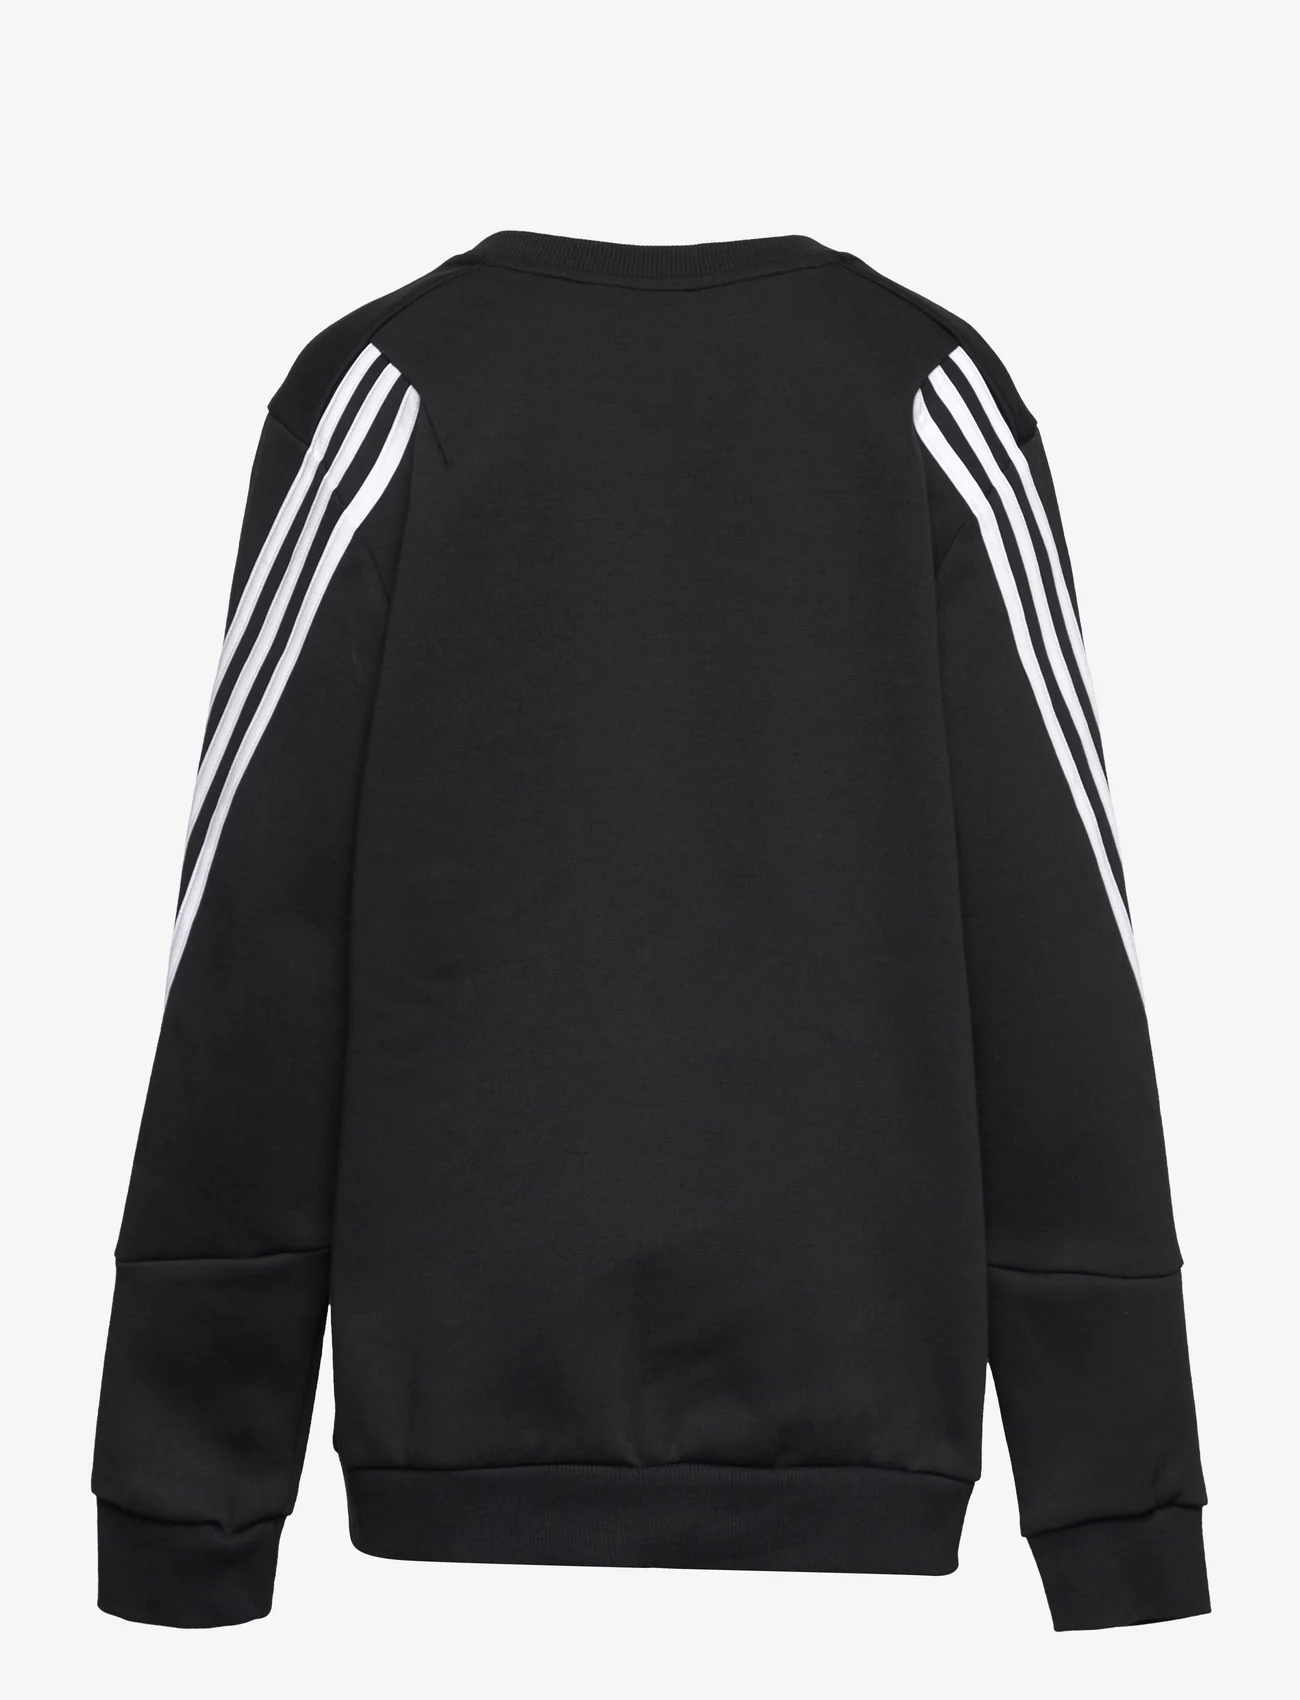 Grau 6-9M KINDER Pullovers & Sweatshirts Sport Zara sweatshirt Rabatt 93 % 